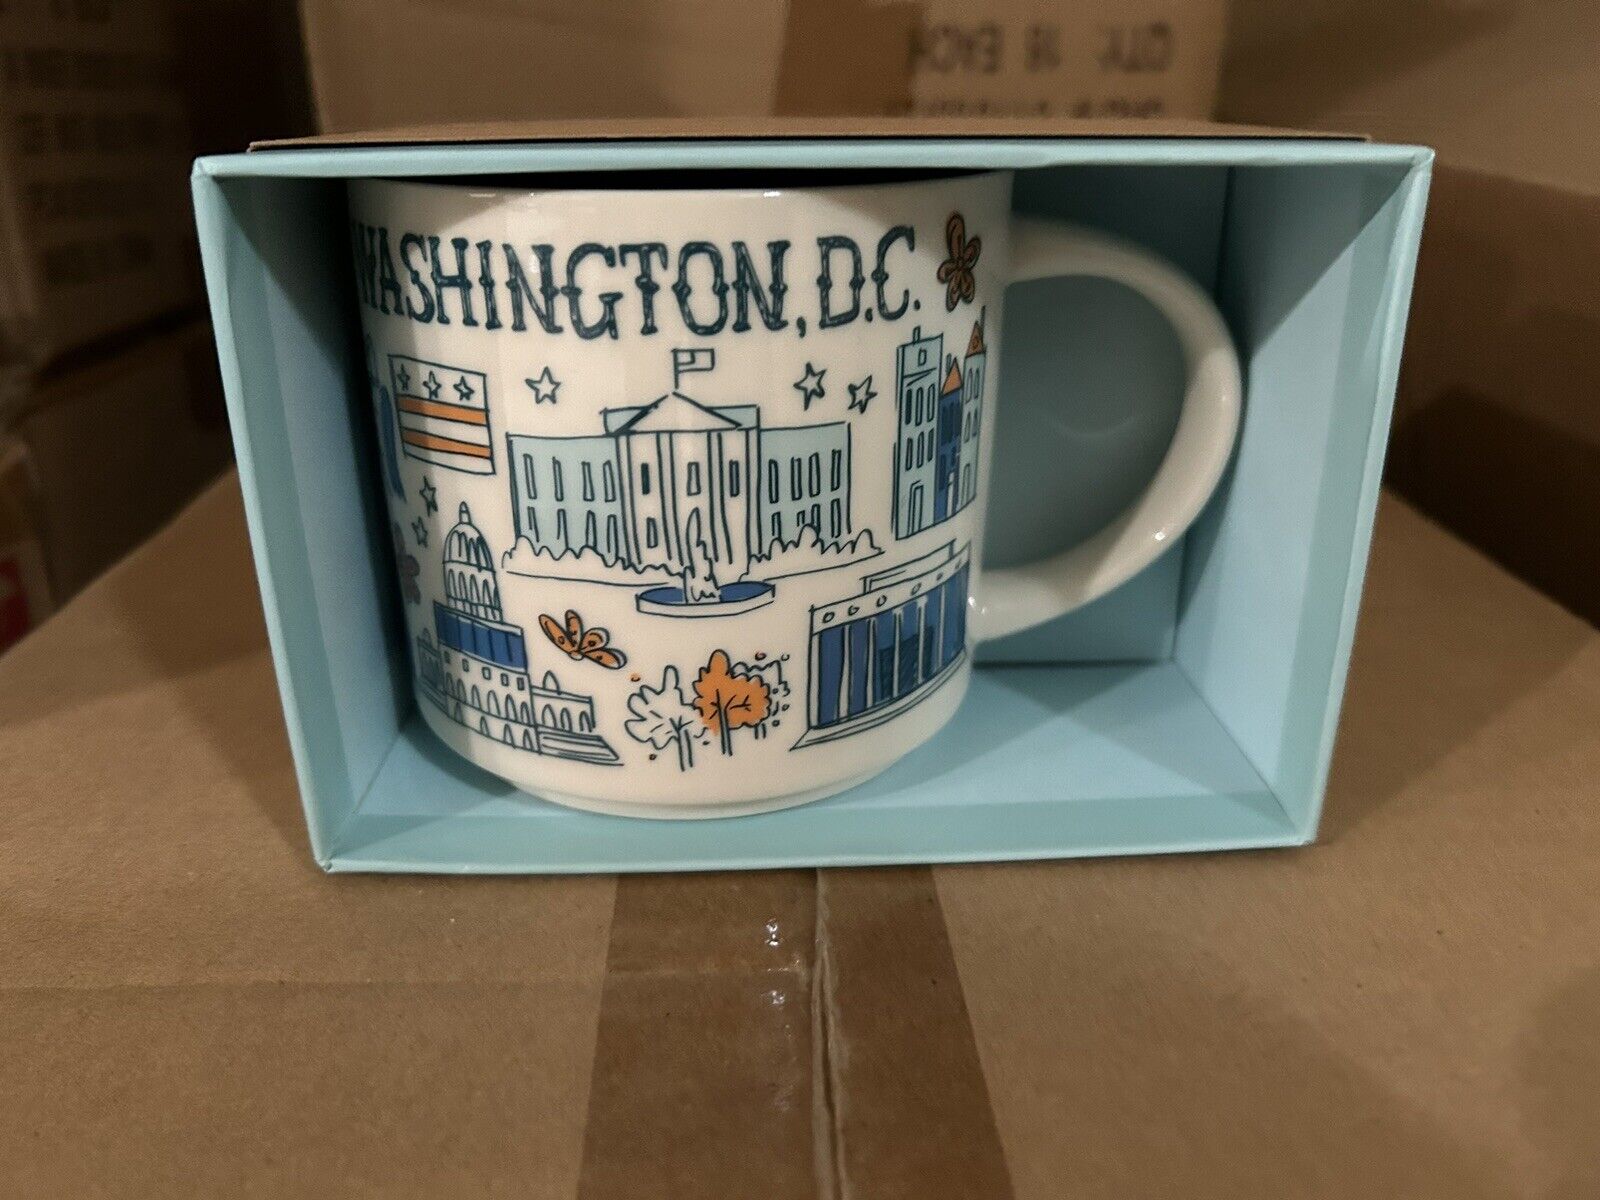 STARBUCKS COFFEE WASHINGTON DC BEEN THERE 2-OZ MINI MUG ORNAMENT - NEW IN BOX